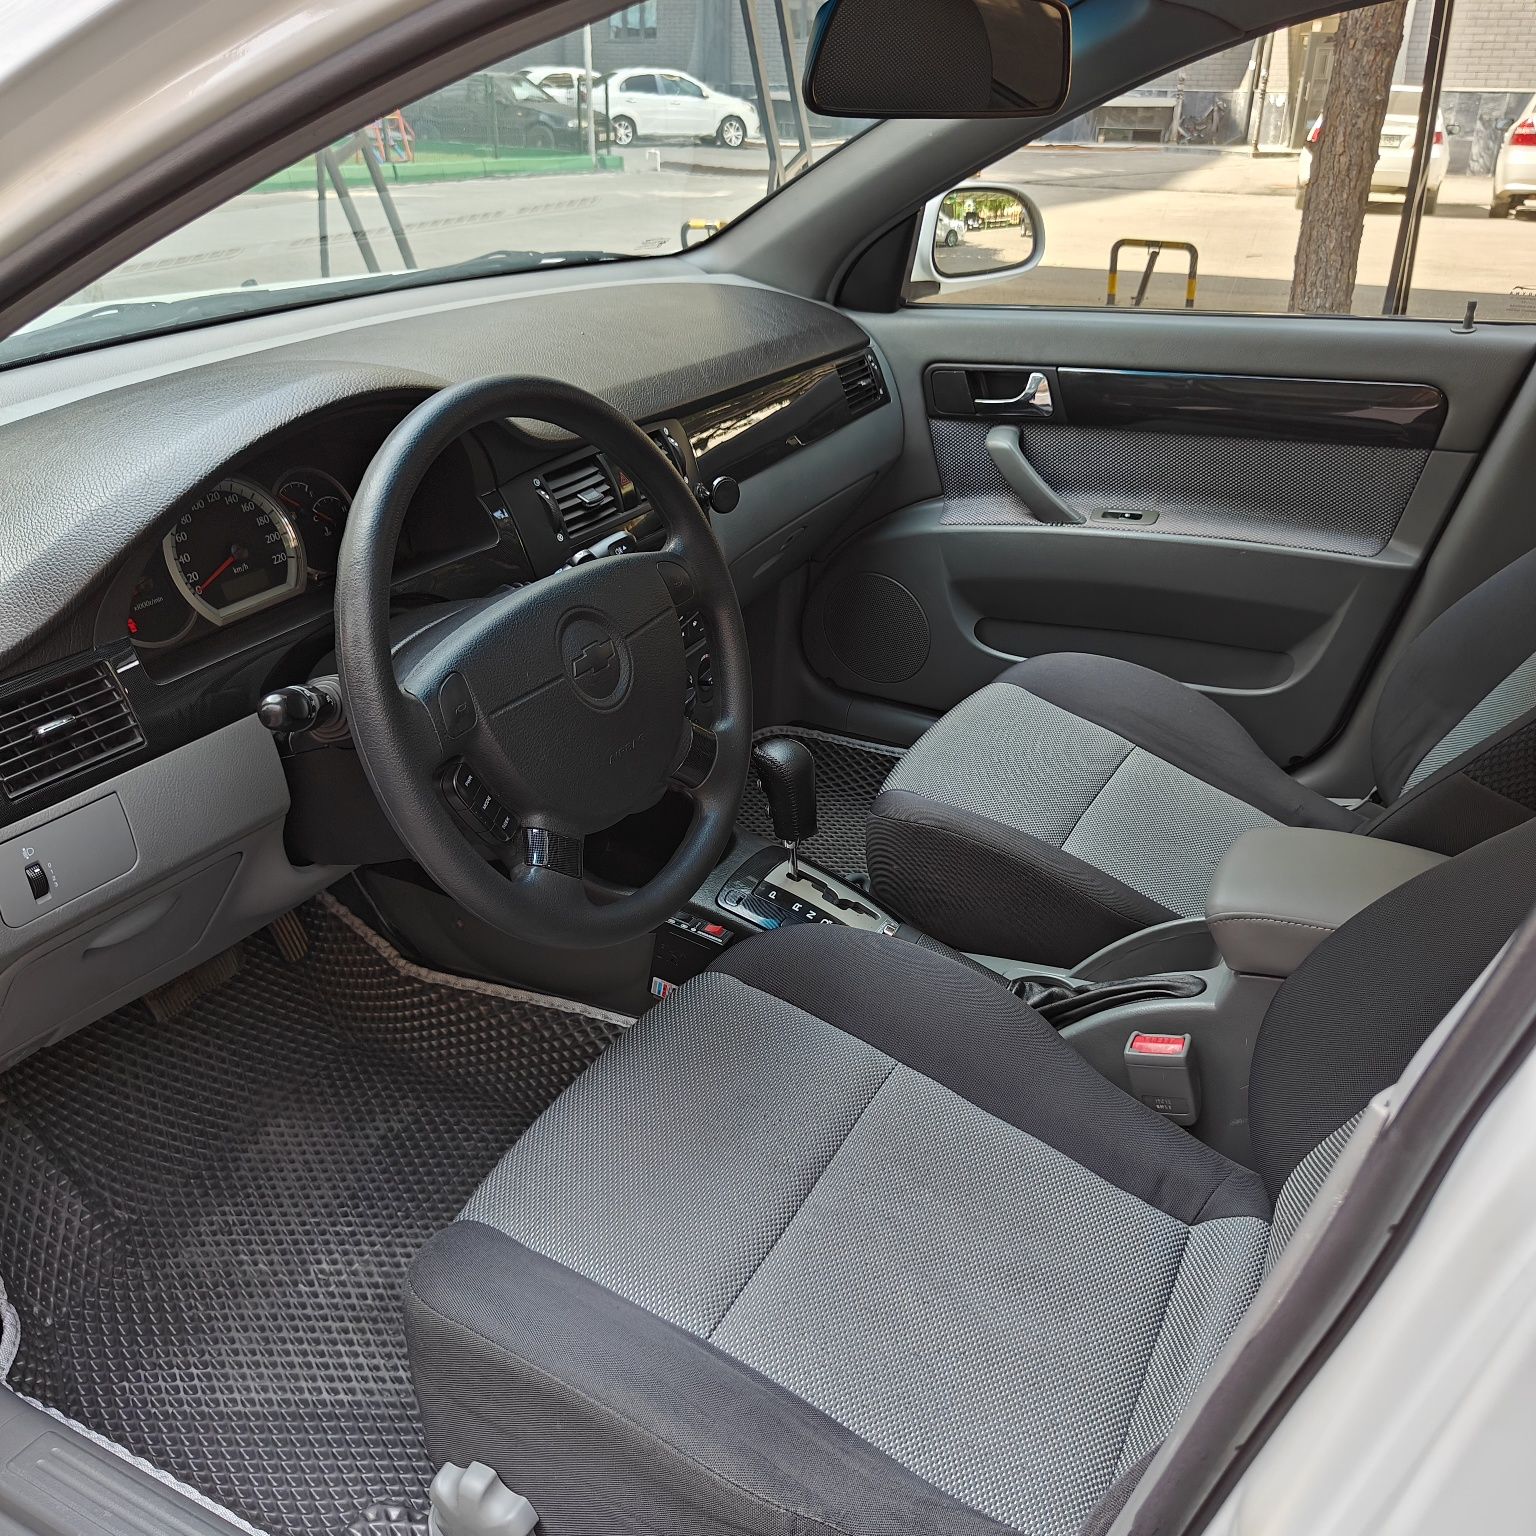 Chevrolet Lacetti, 2013, 1,6 л, АКПП в отличном состоянии